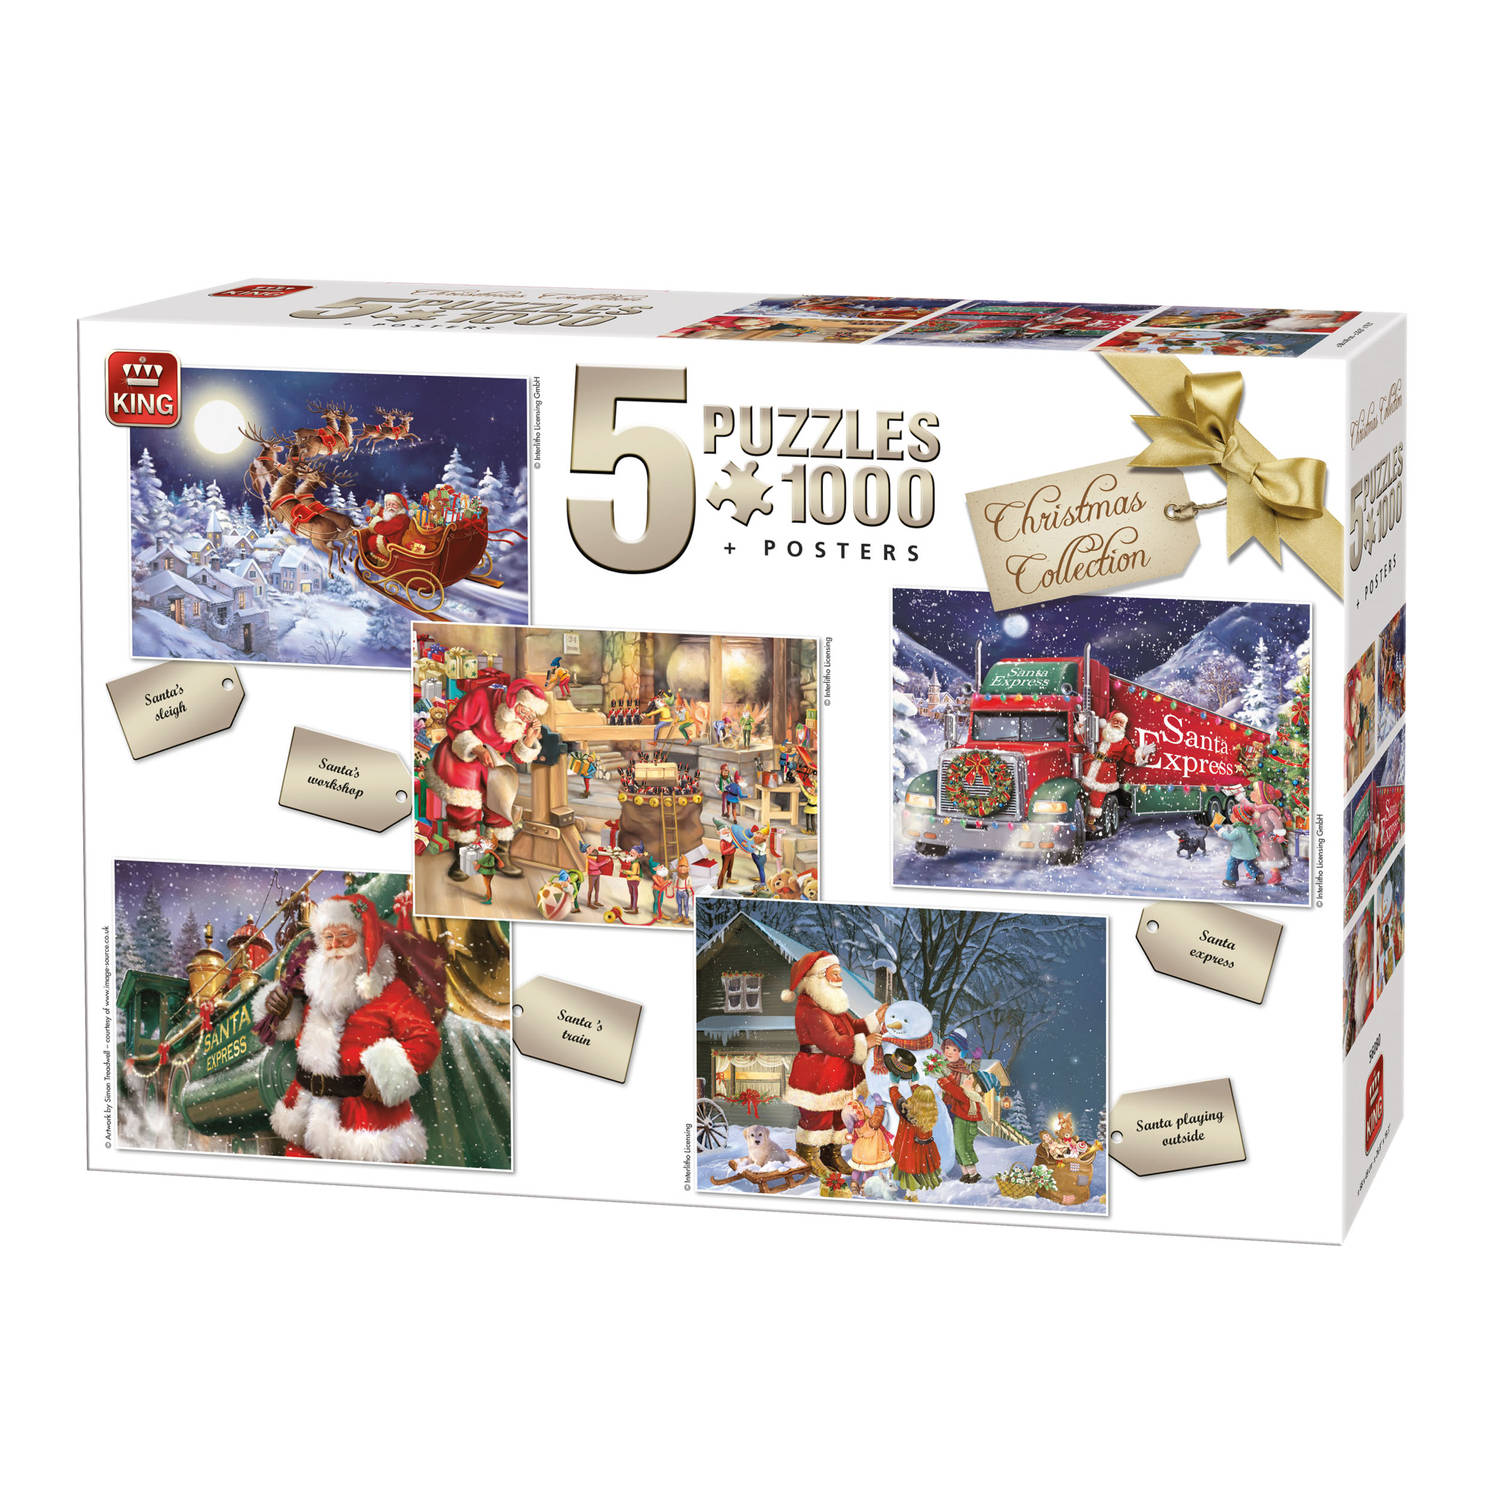 King Kerst Collection 5-in-1 puzzel - 5x1000 stukjes